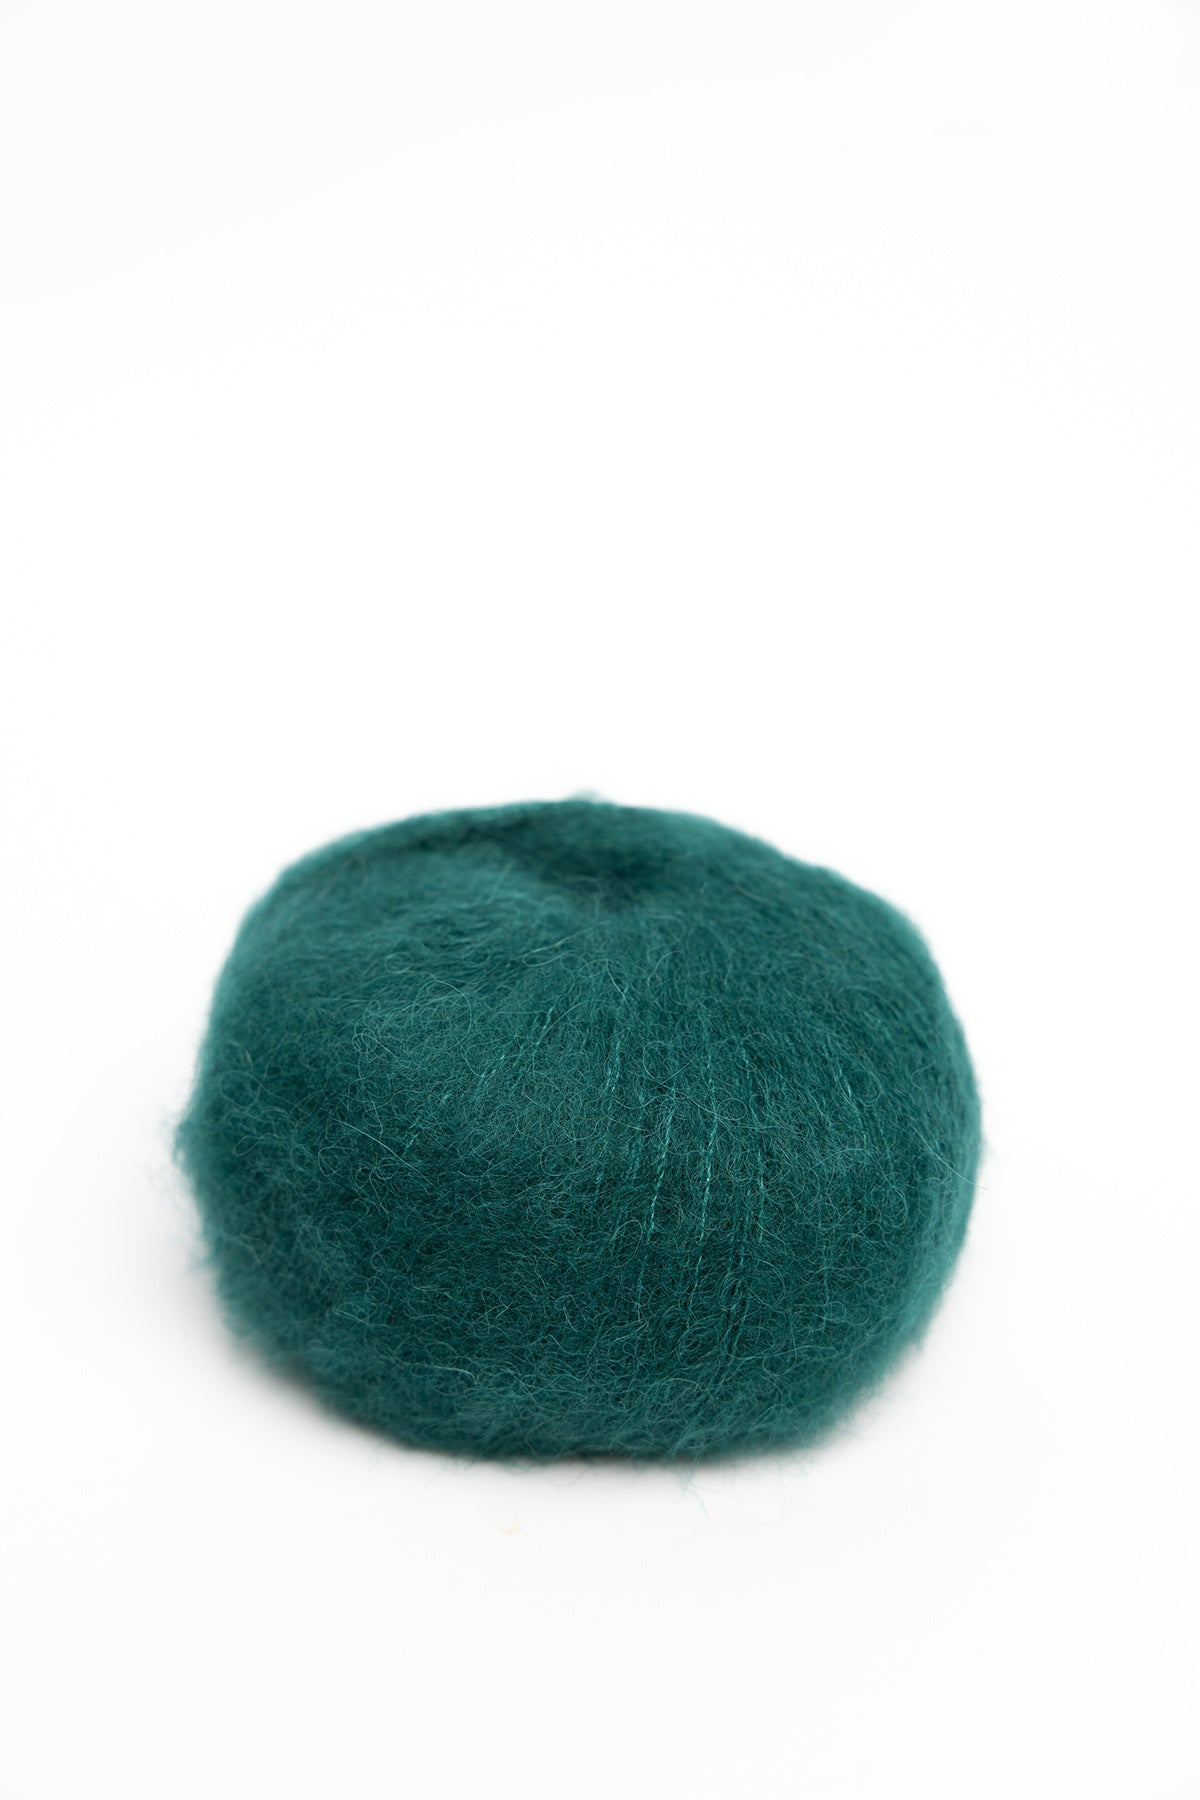 Brushed Alpaca Silk Drops | Shop Yarn Online Today - Beehive Wool Shop